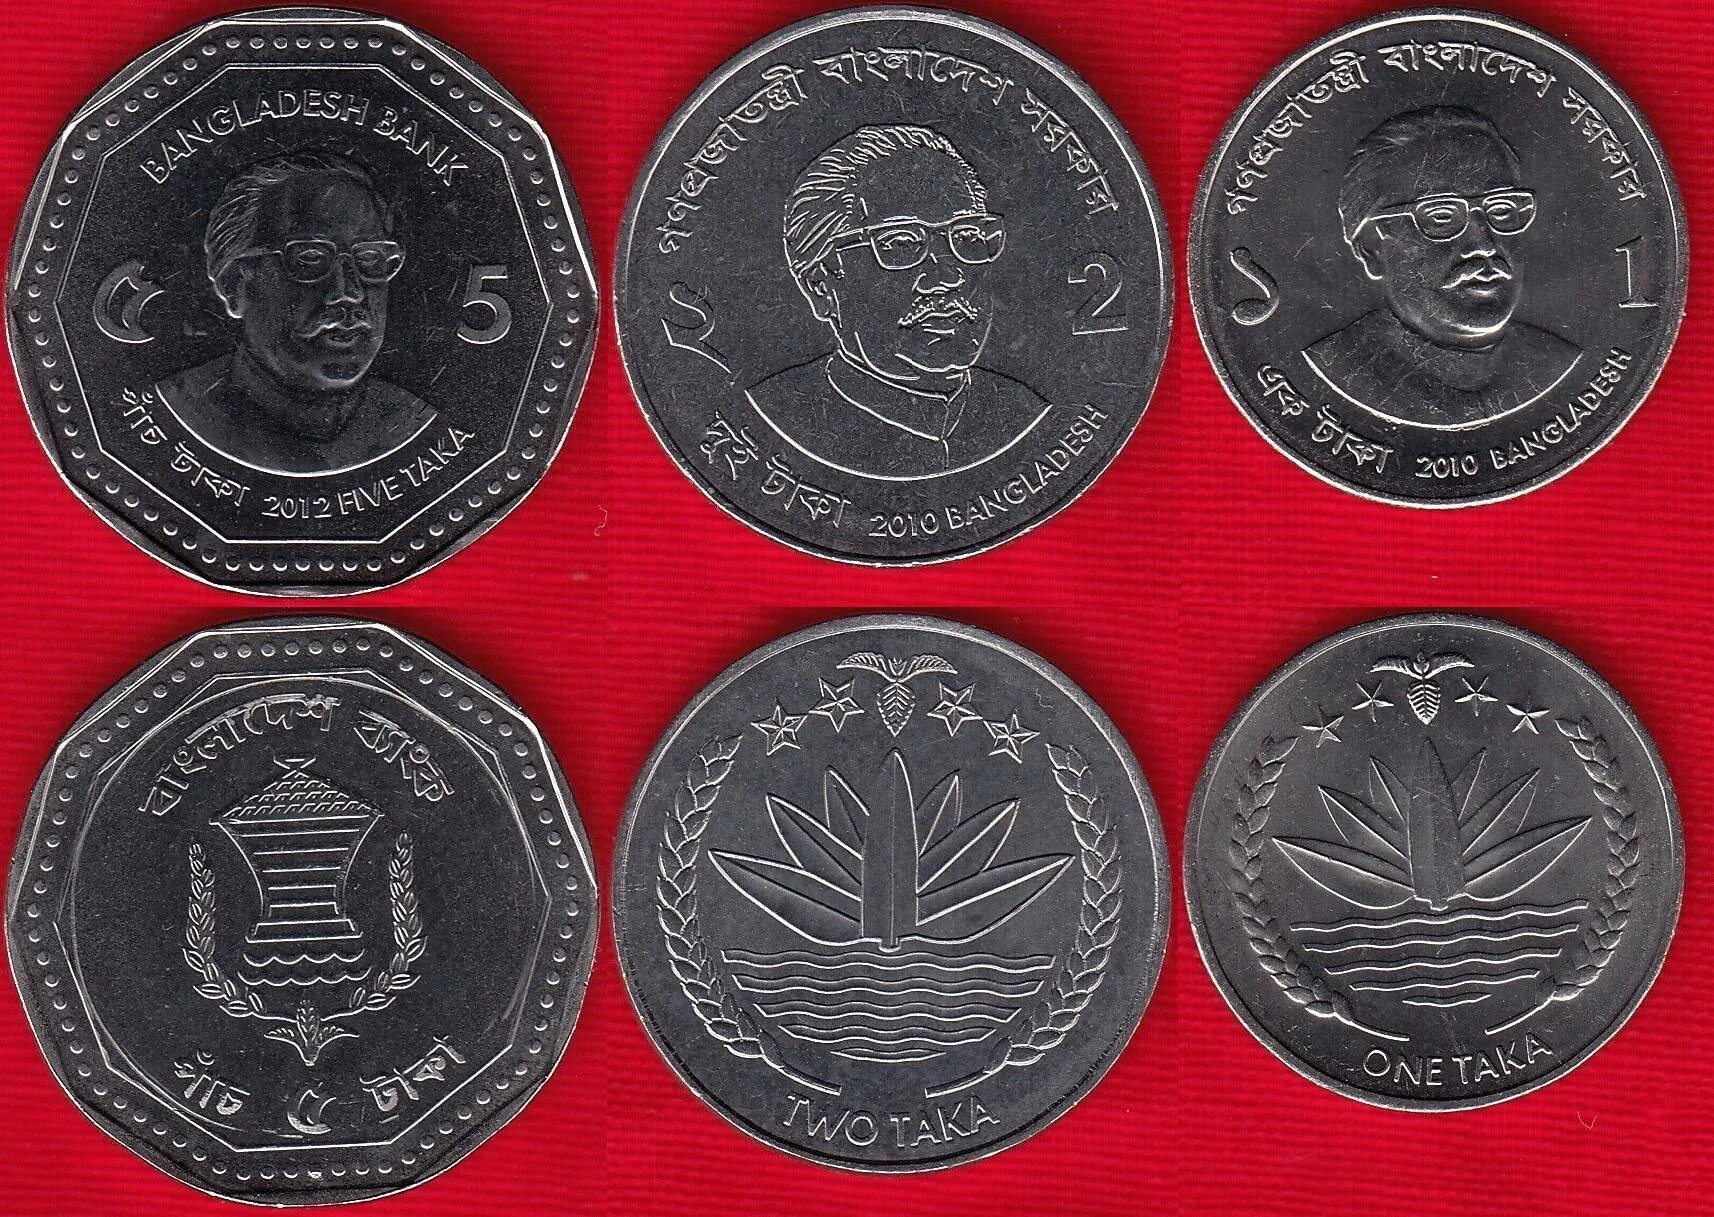 5 така. 1 Така 2010 Бангладеш. Монеты Бангладеш. 1 Така Бангладеш монета. Бангладеш набор 3 монеты.